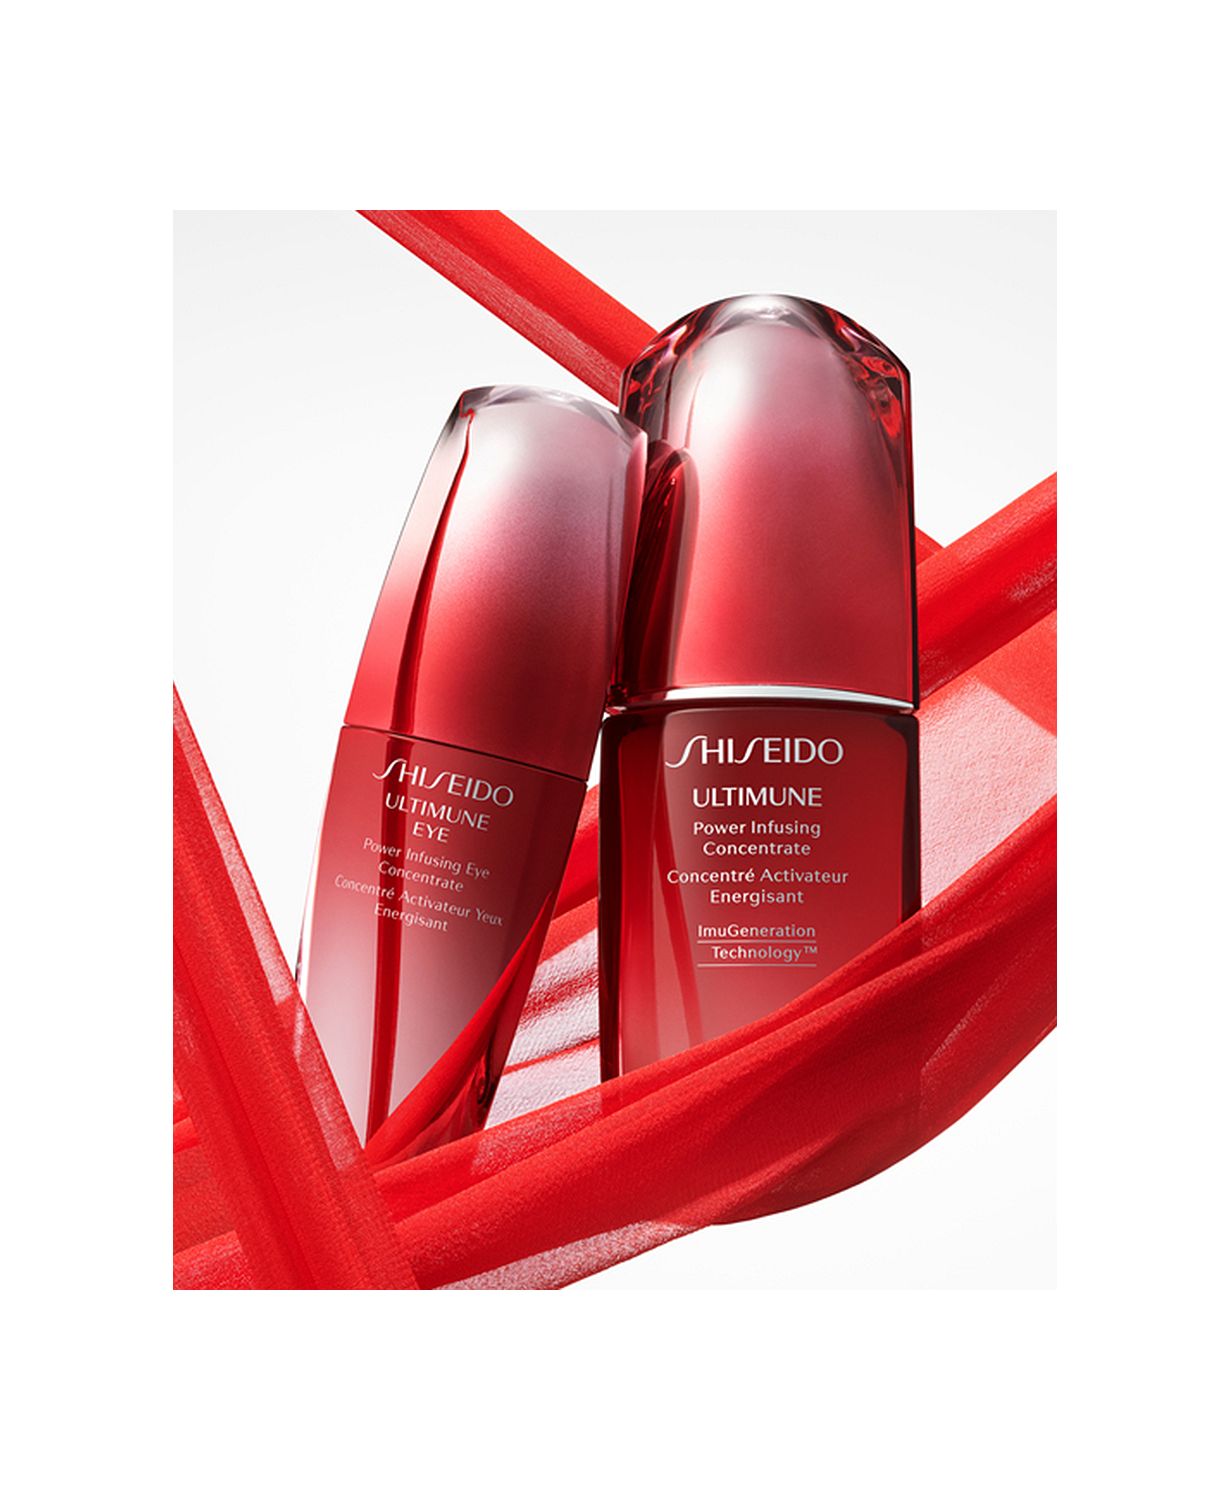 Shiseido 30. Shiseido 35+. Шисейдо 160 Shell. Крем шисейдо красный. Шисейдо лимитированная коллекция.